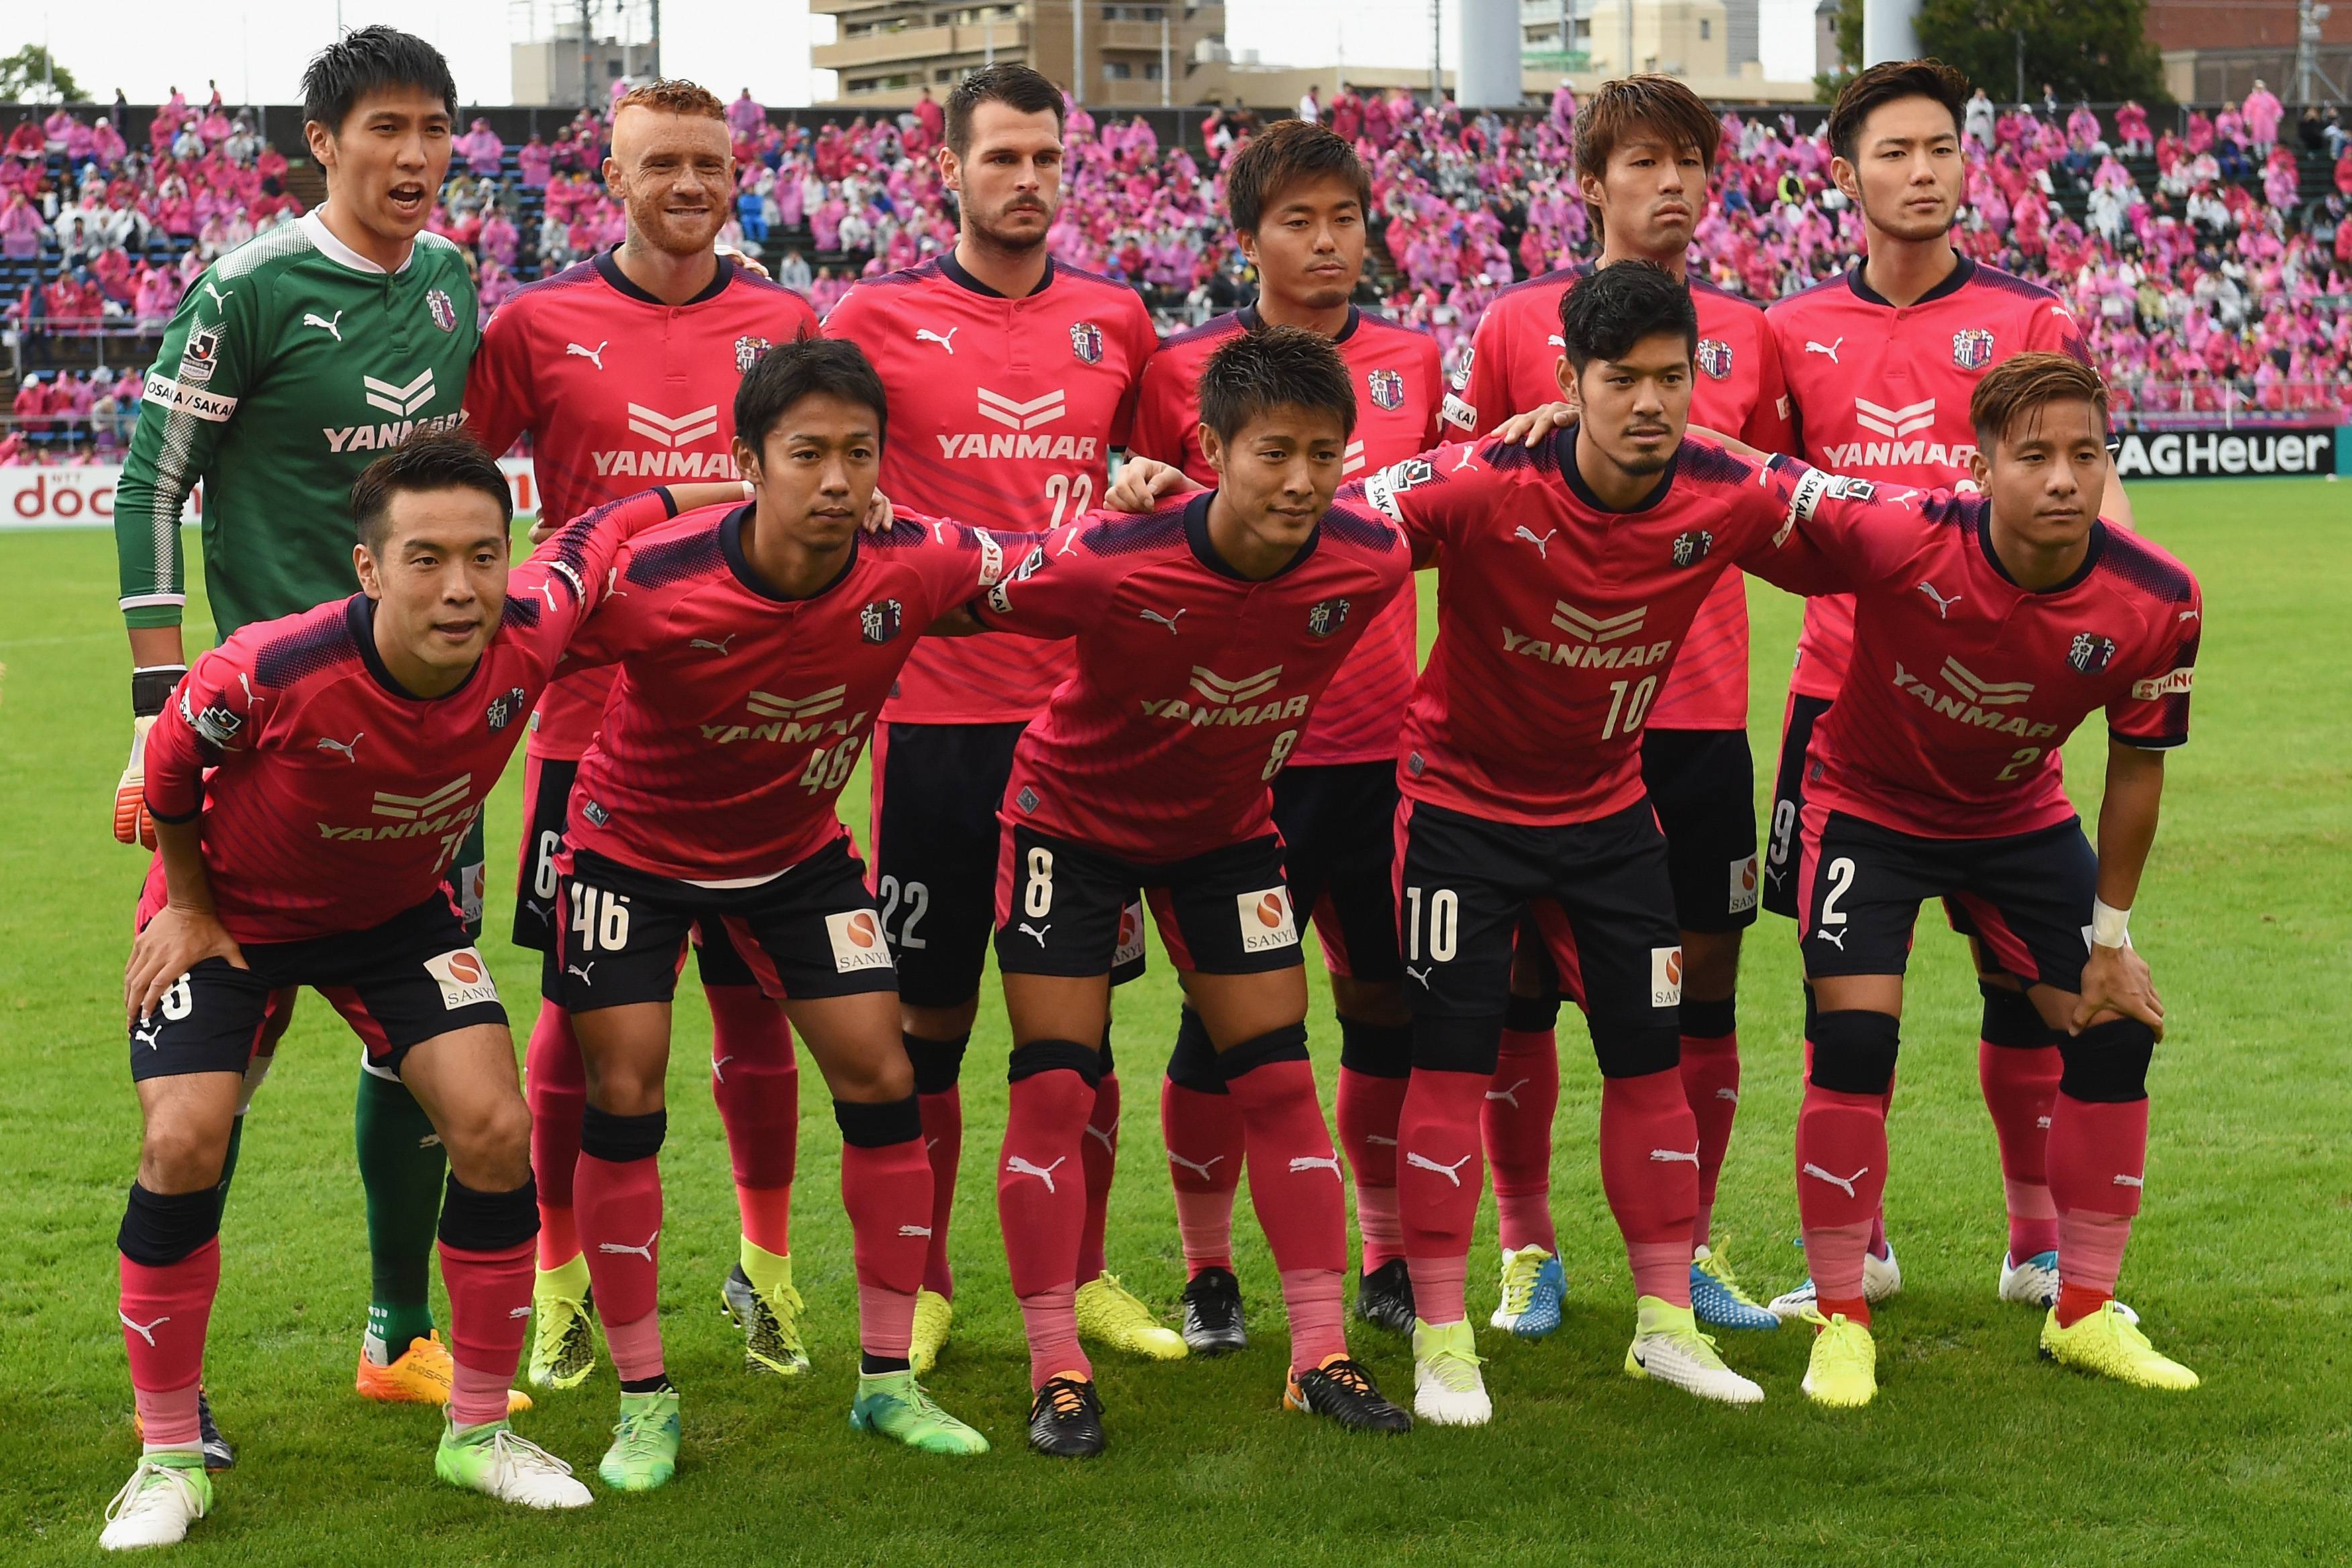 Cerezo Osaka capture Levain Cup on Sugimoto, Souza goals